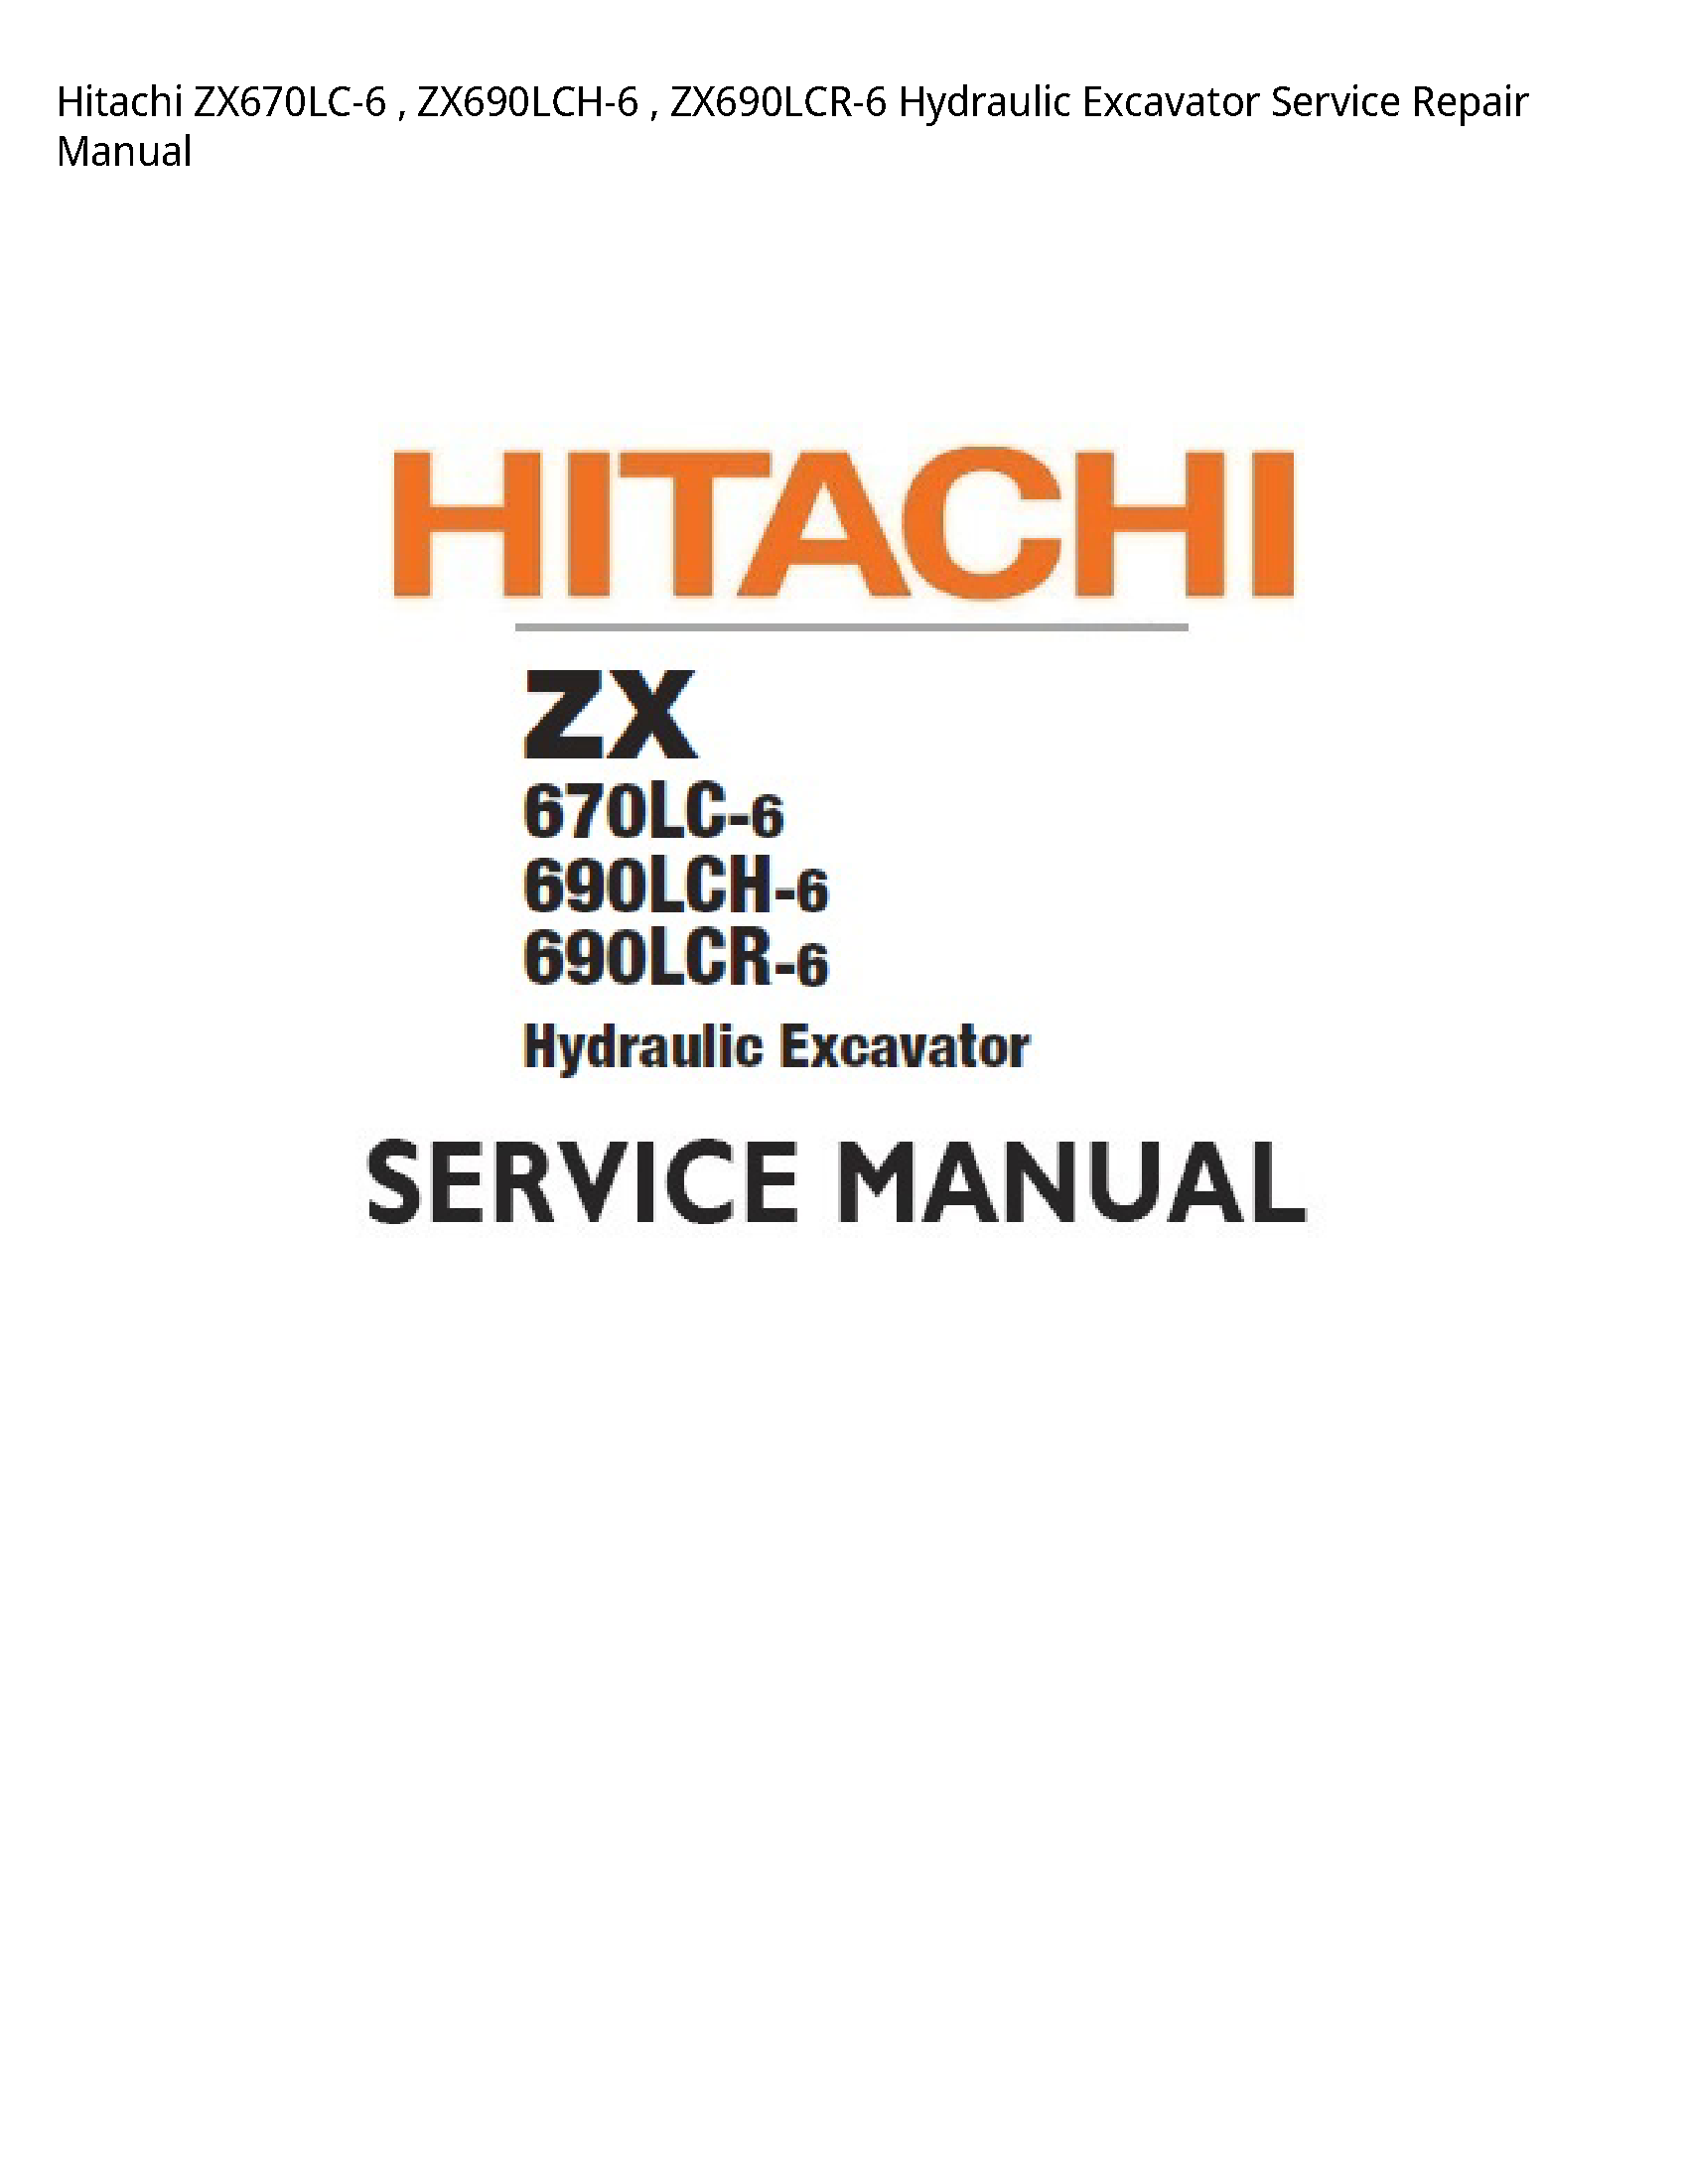 Hitachi ZX670LC-6 Hydraulic Excavator manual